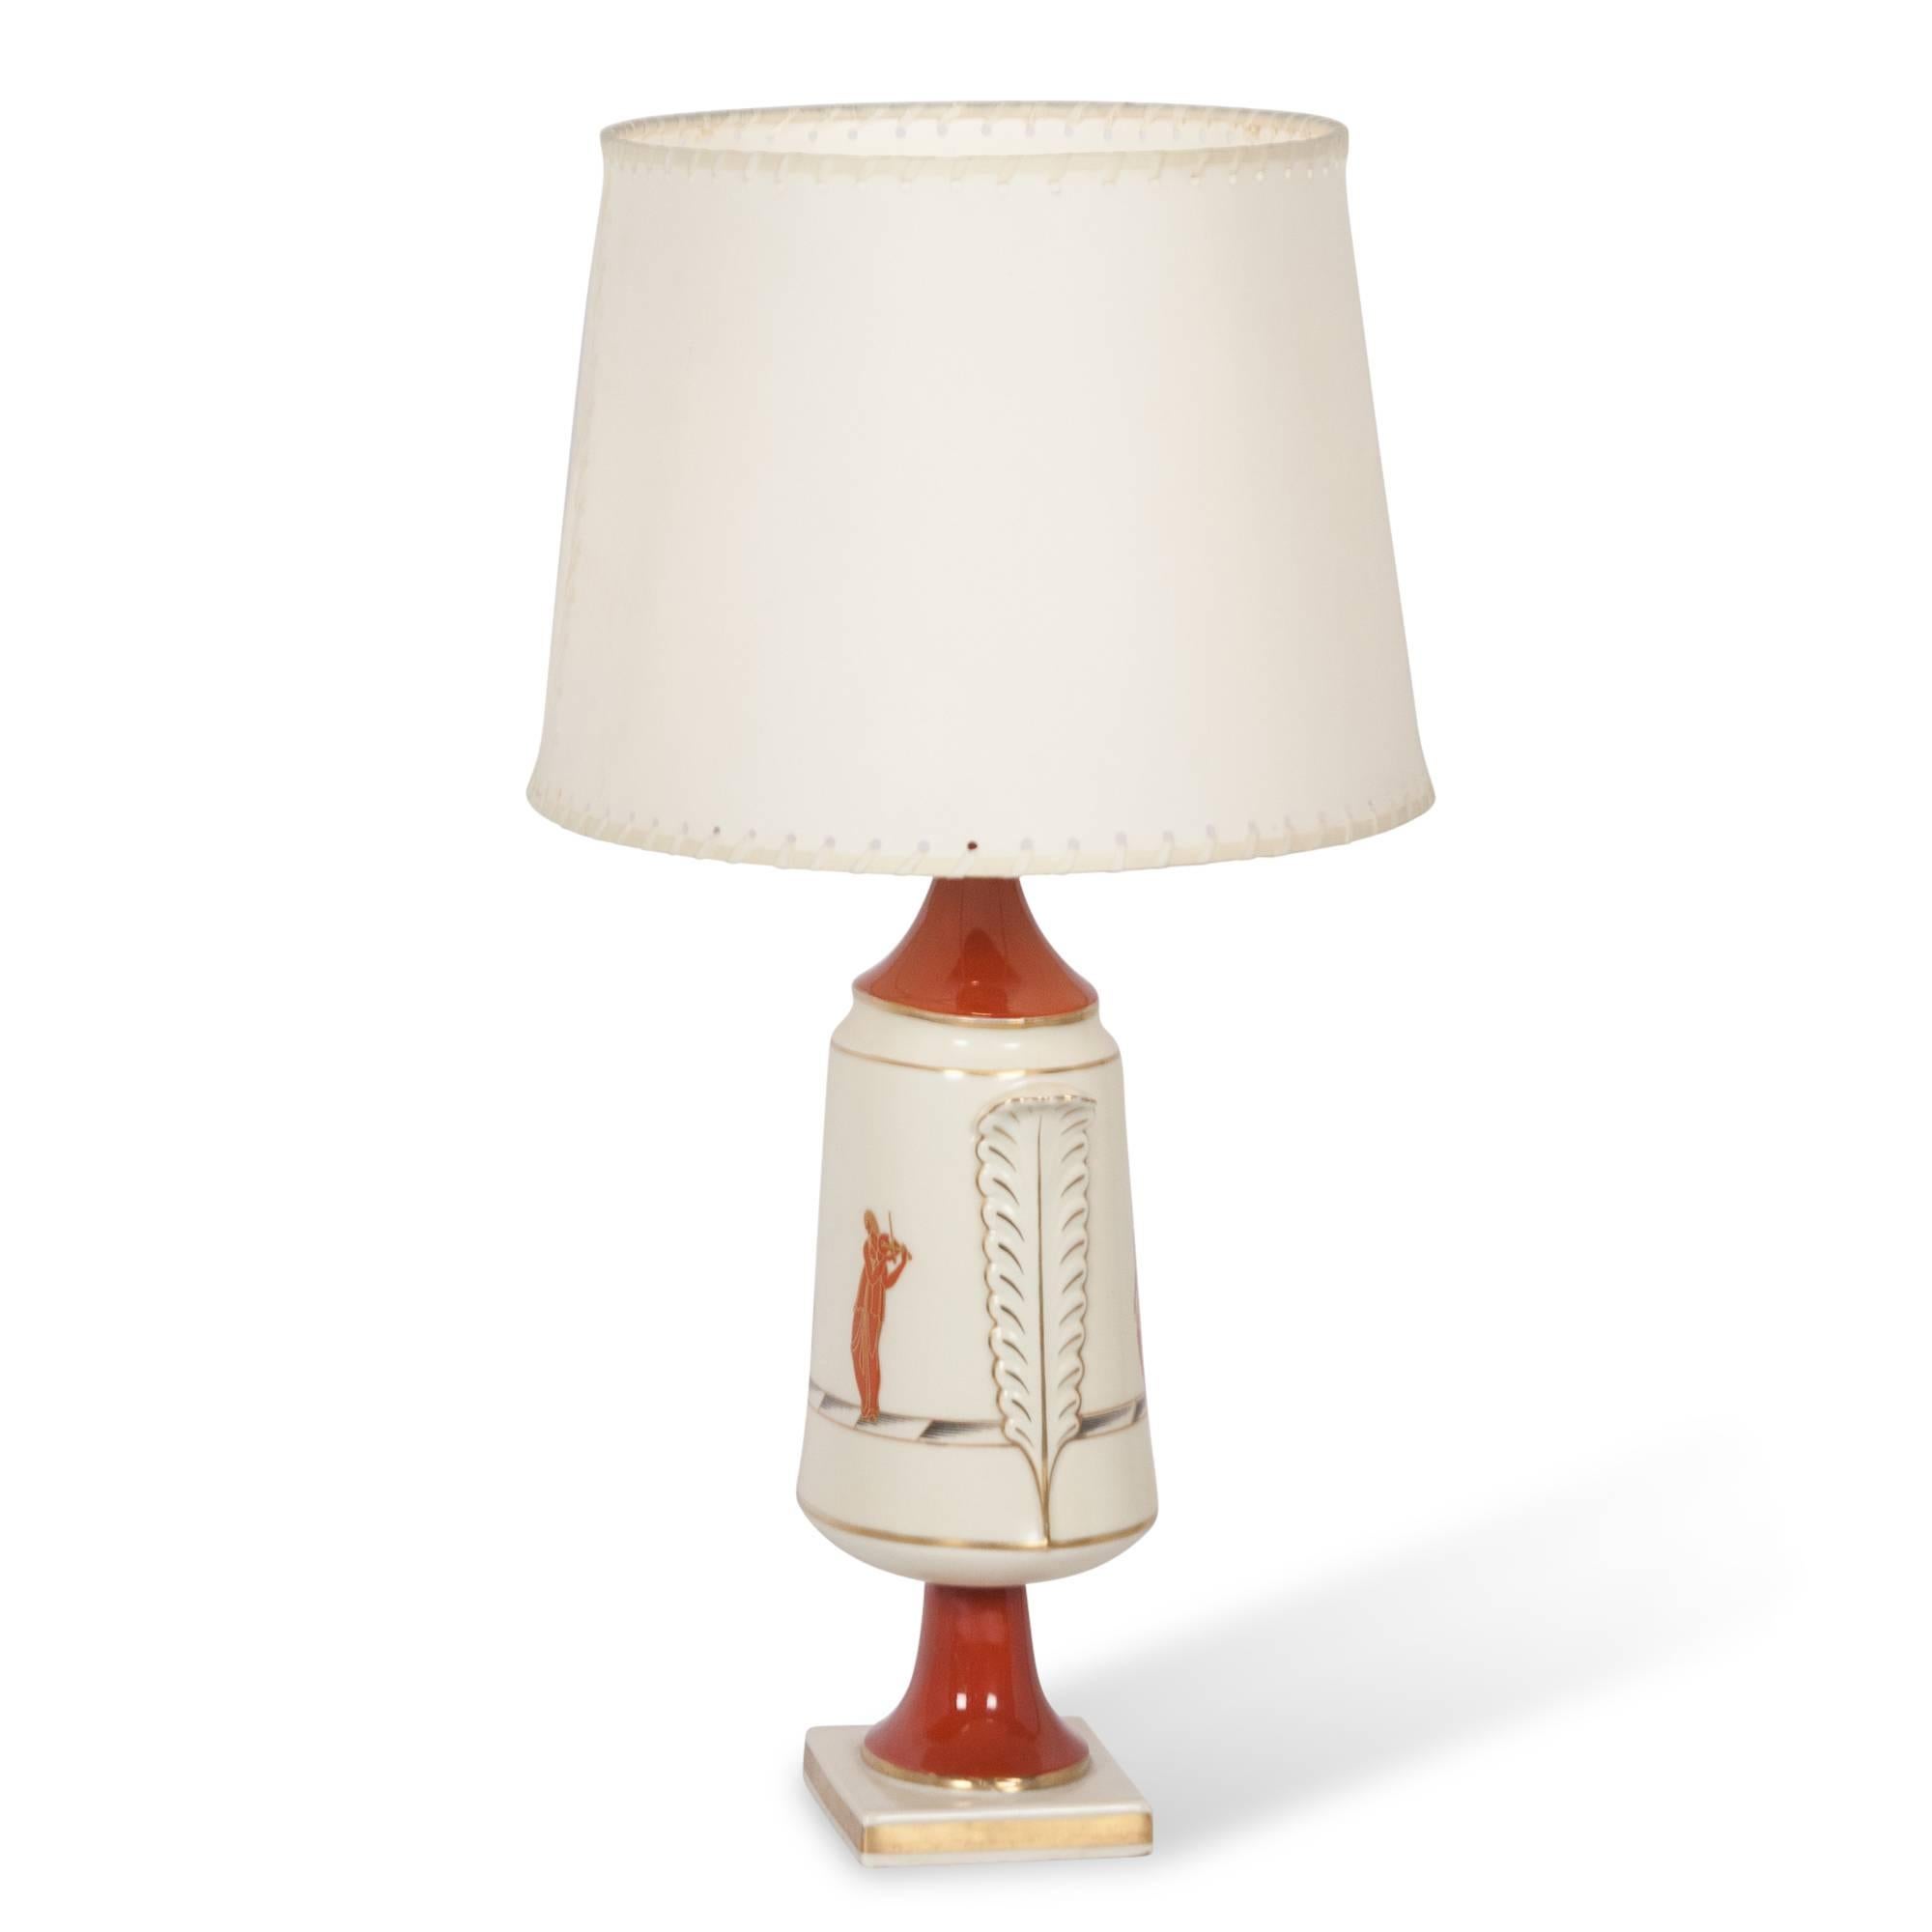 Gio Ponti for Ginori Table Lamp, Italian, 1920s In Excellent Condition For Sale In Hoboken, NJ